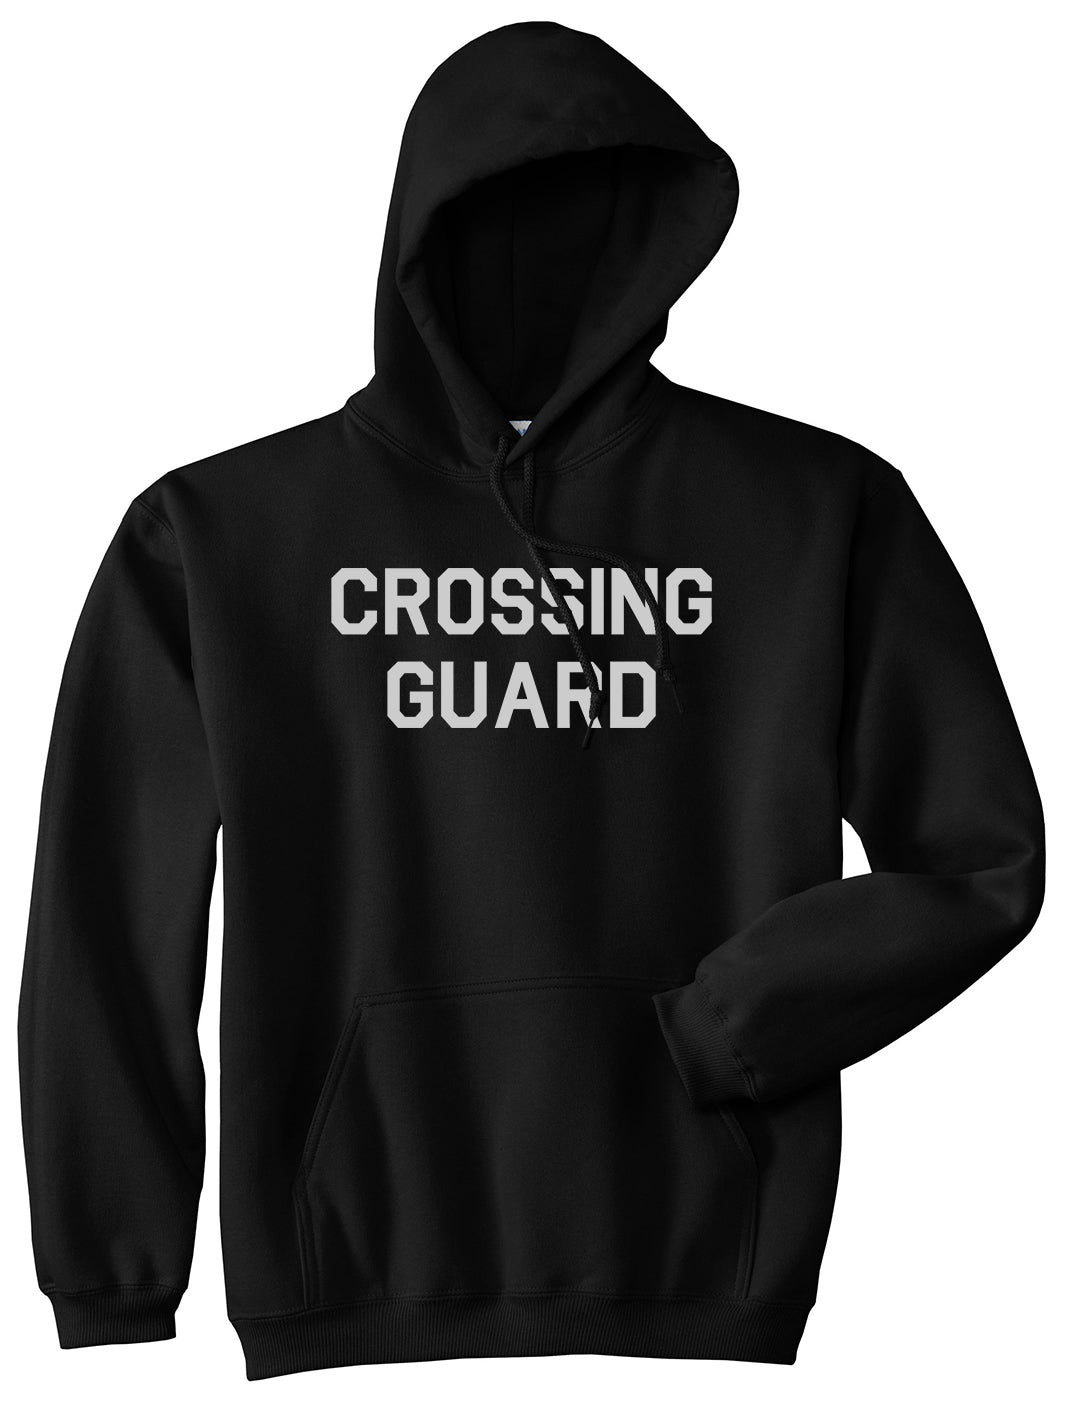 Crossing Guard Mens Black Pullover Hoodie by Kings Of NY